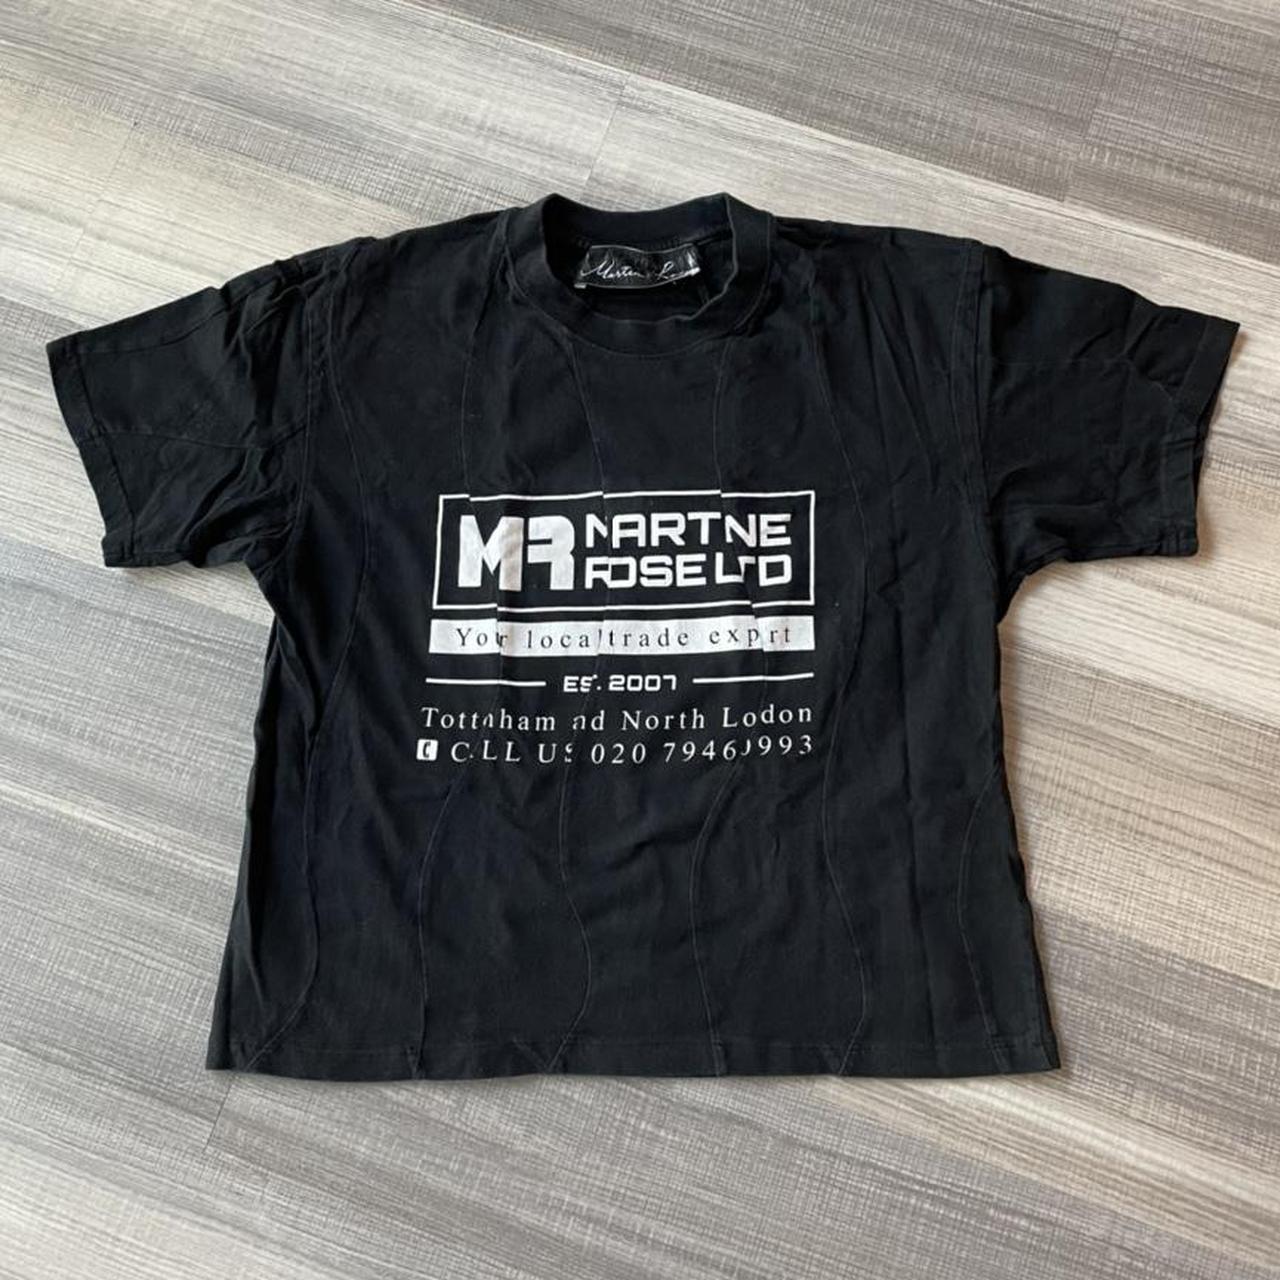 Product Image 2 - Martine rose tshirt. Originally bought